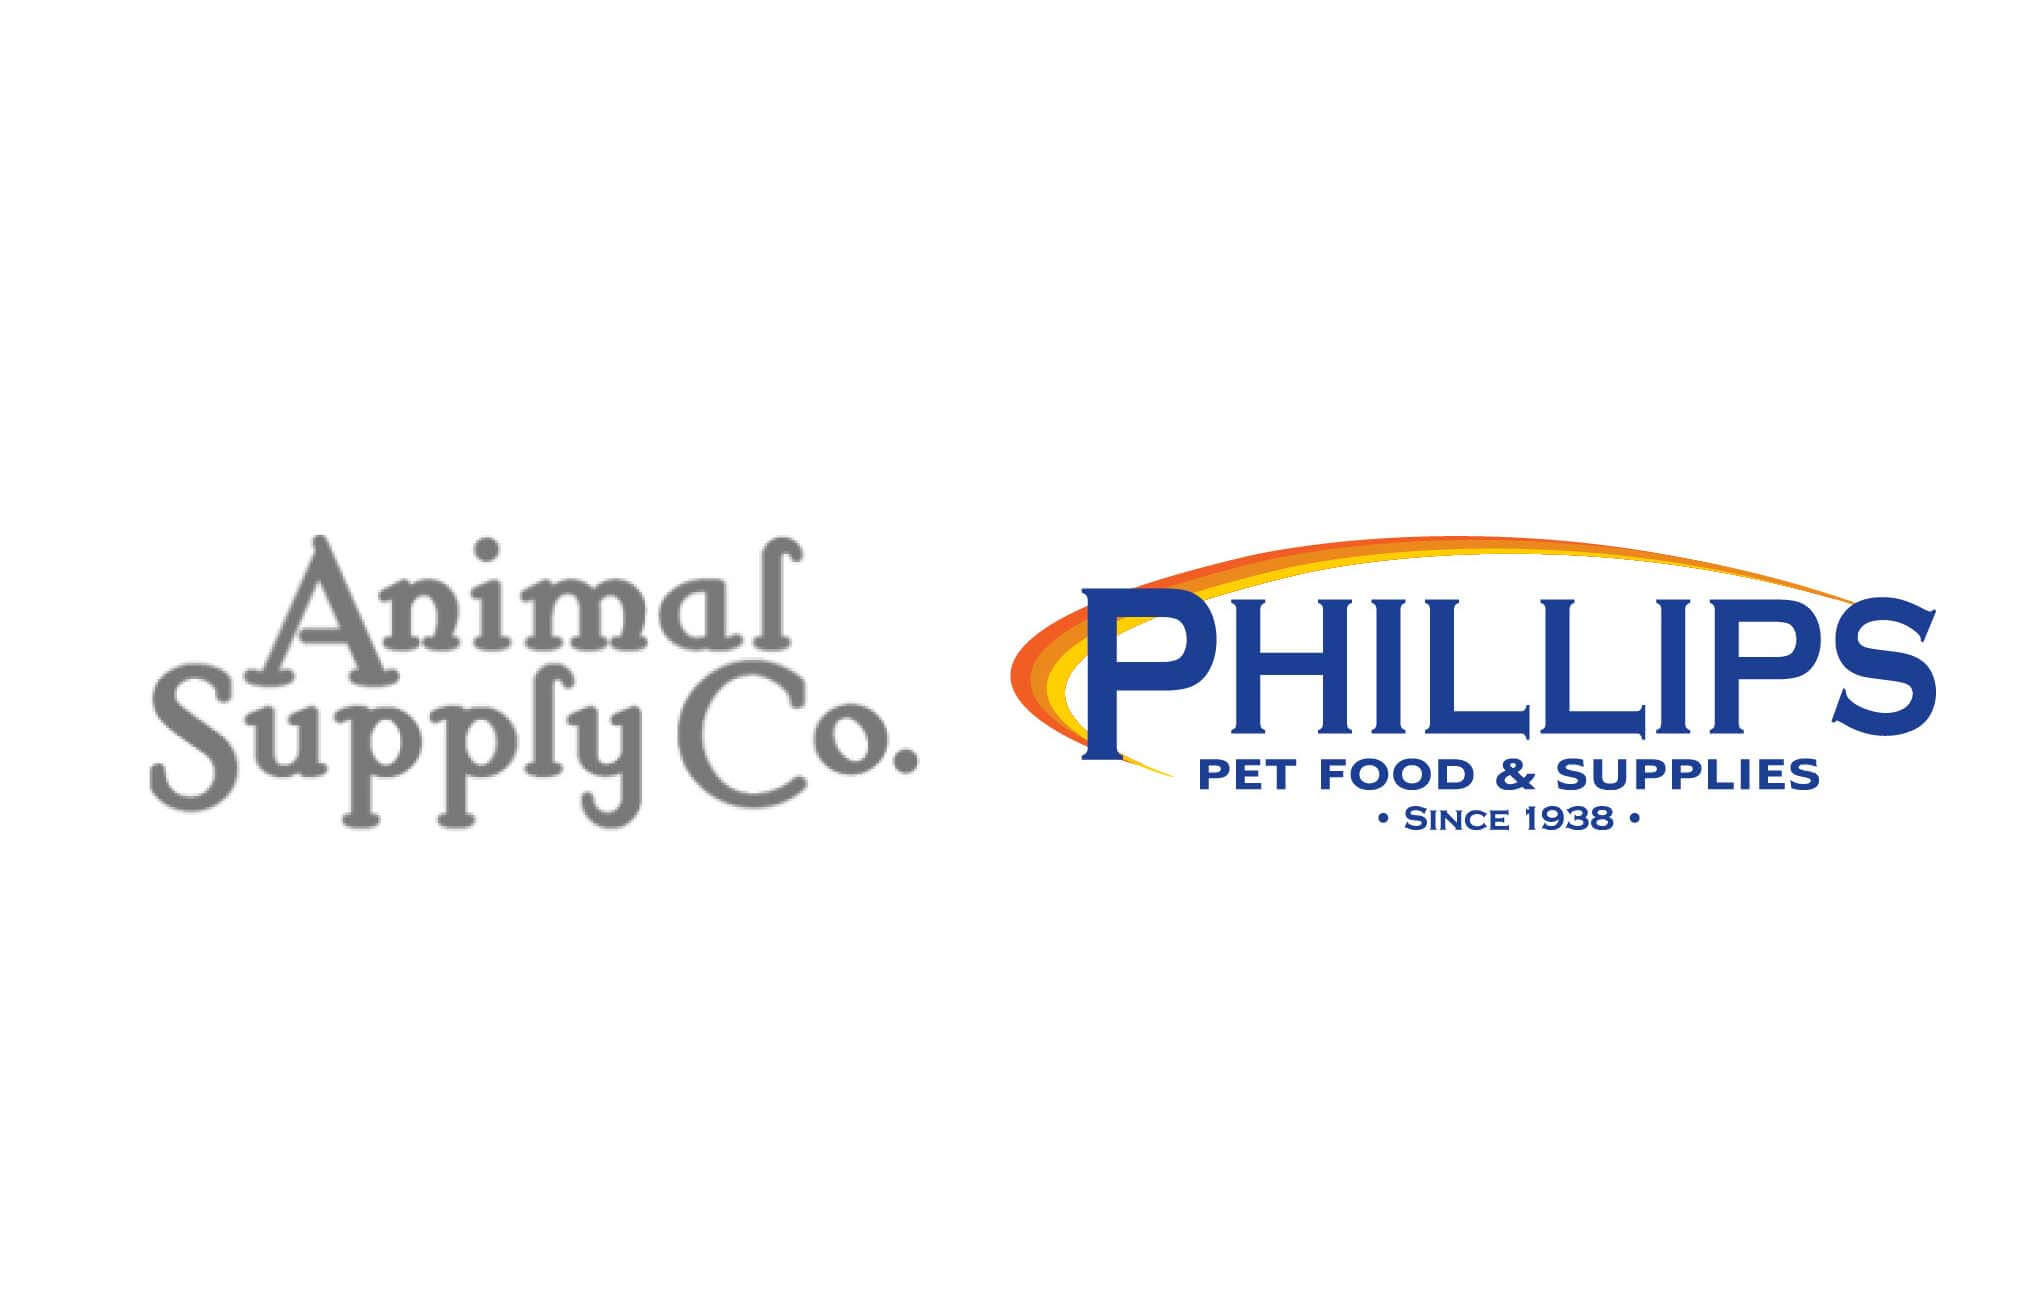 phillips pet supplies